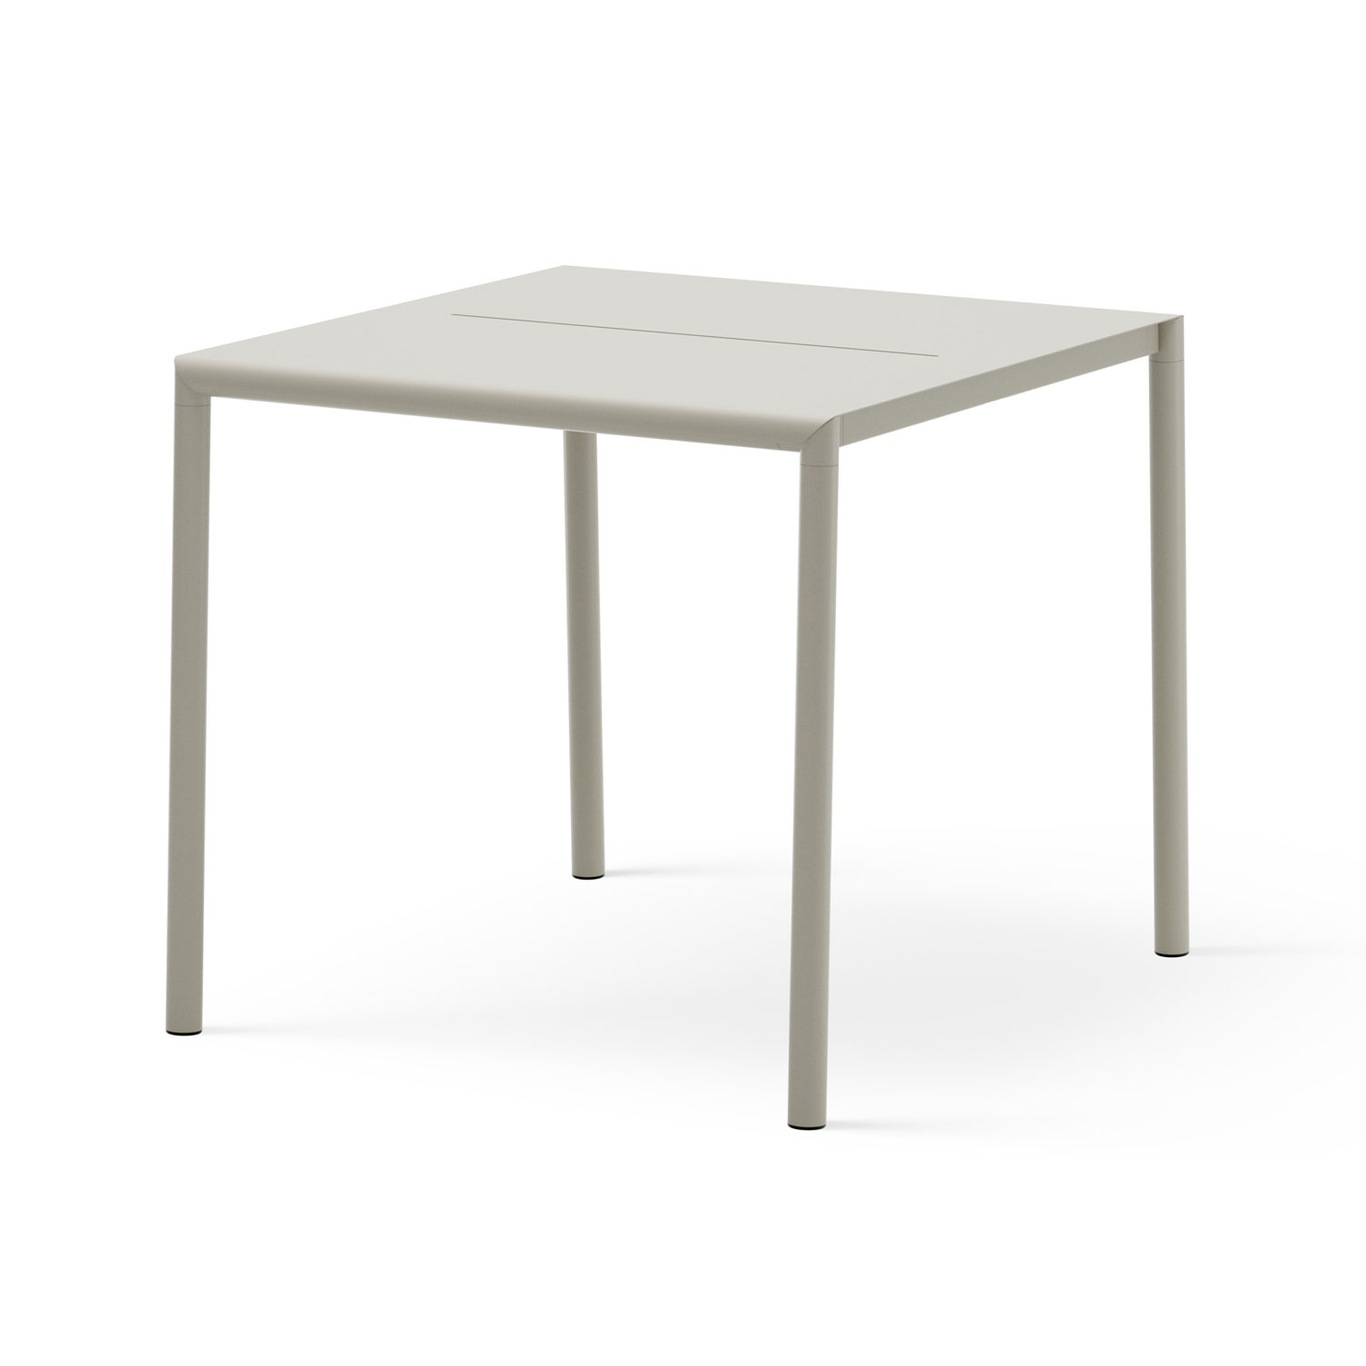 May Table 85x85, Outdoor, Steel, Light Grey